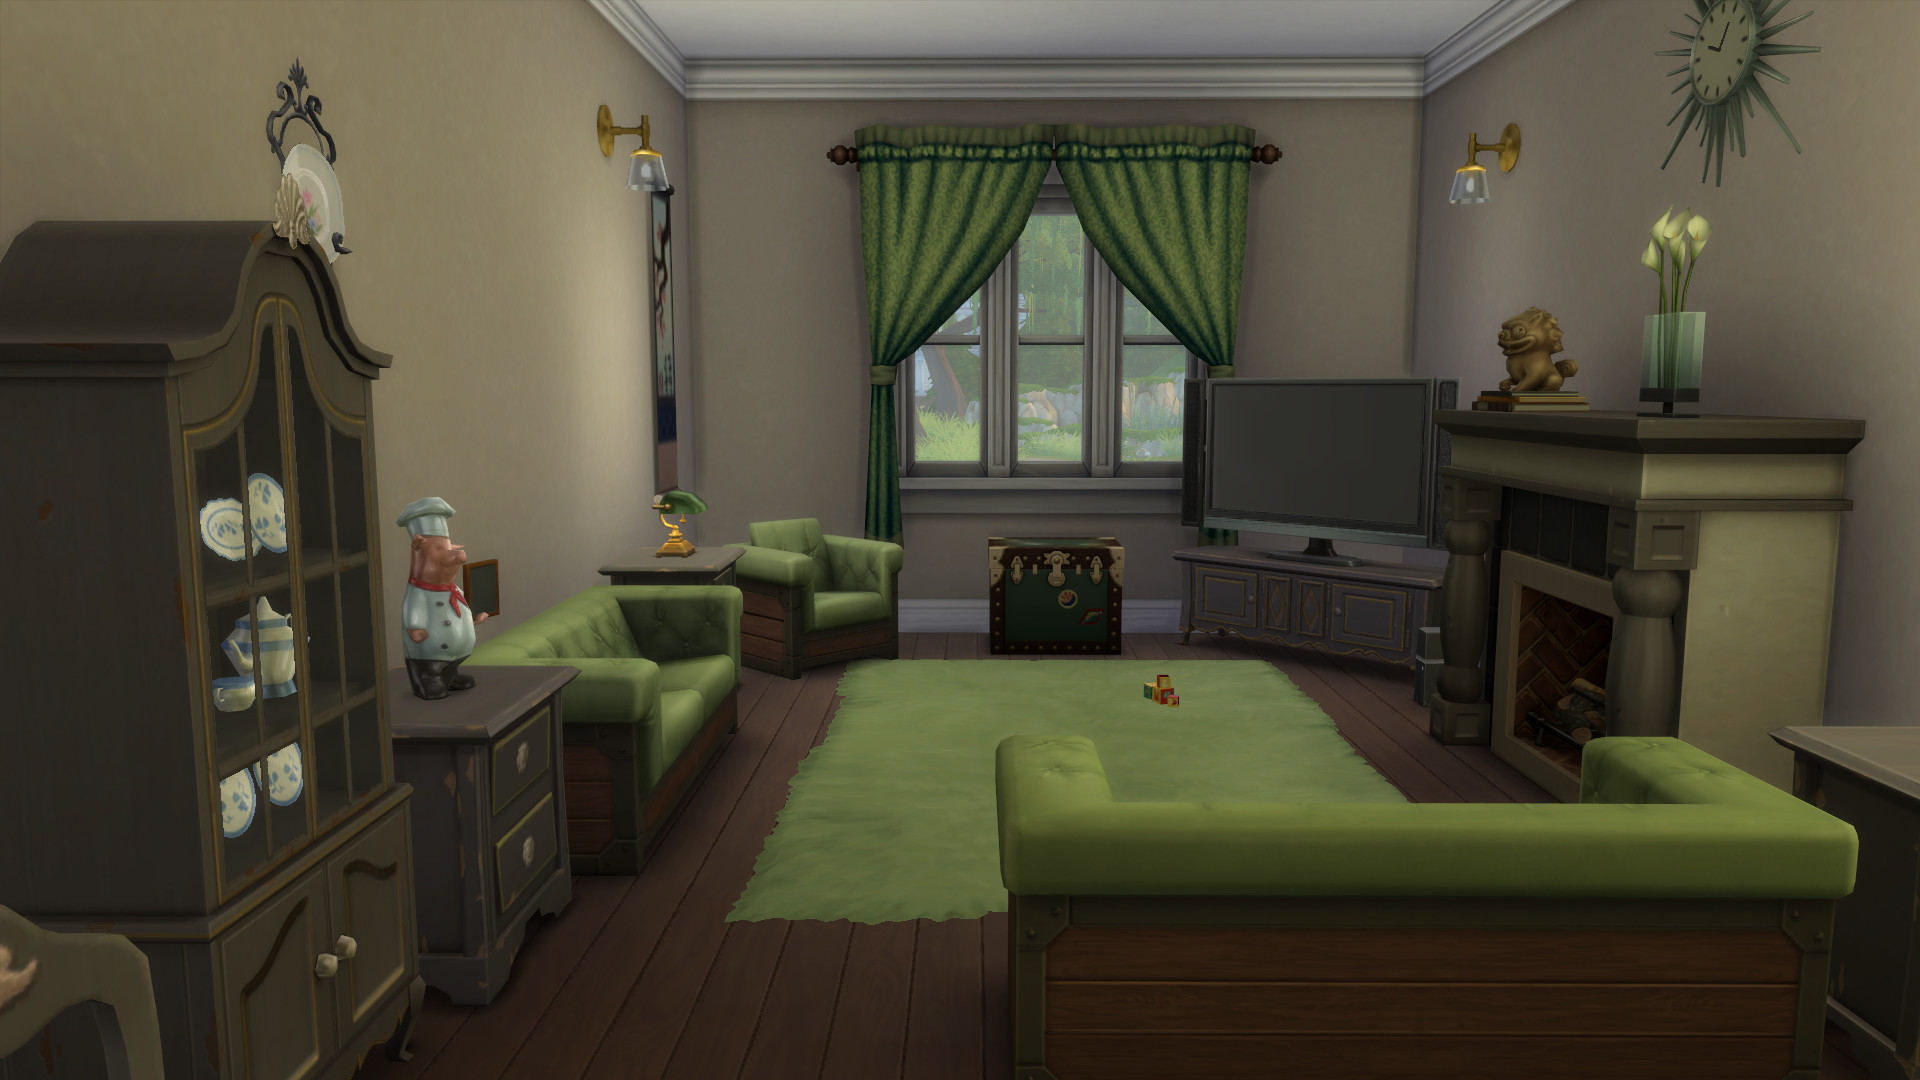 Sims 4 Living Room Ideas
 Sims 4 Living Room No Cc